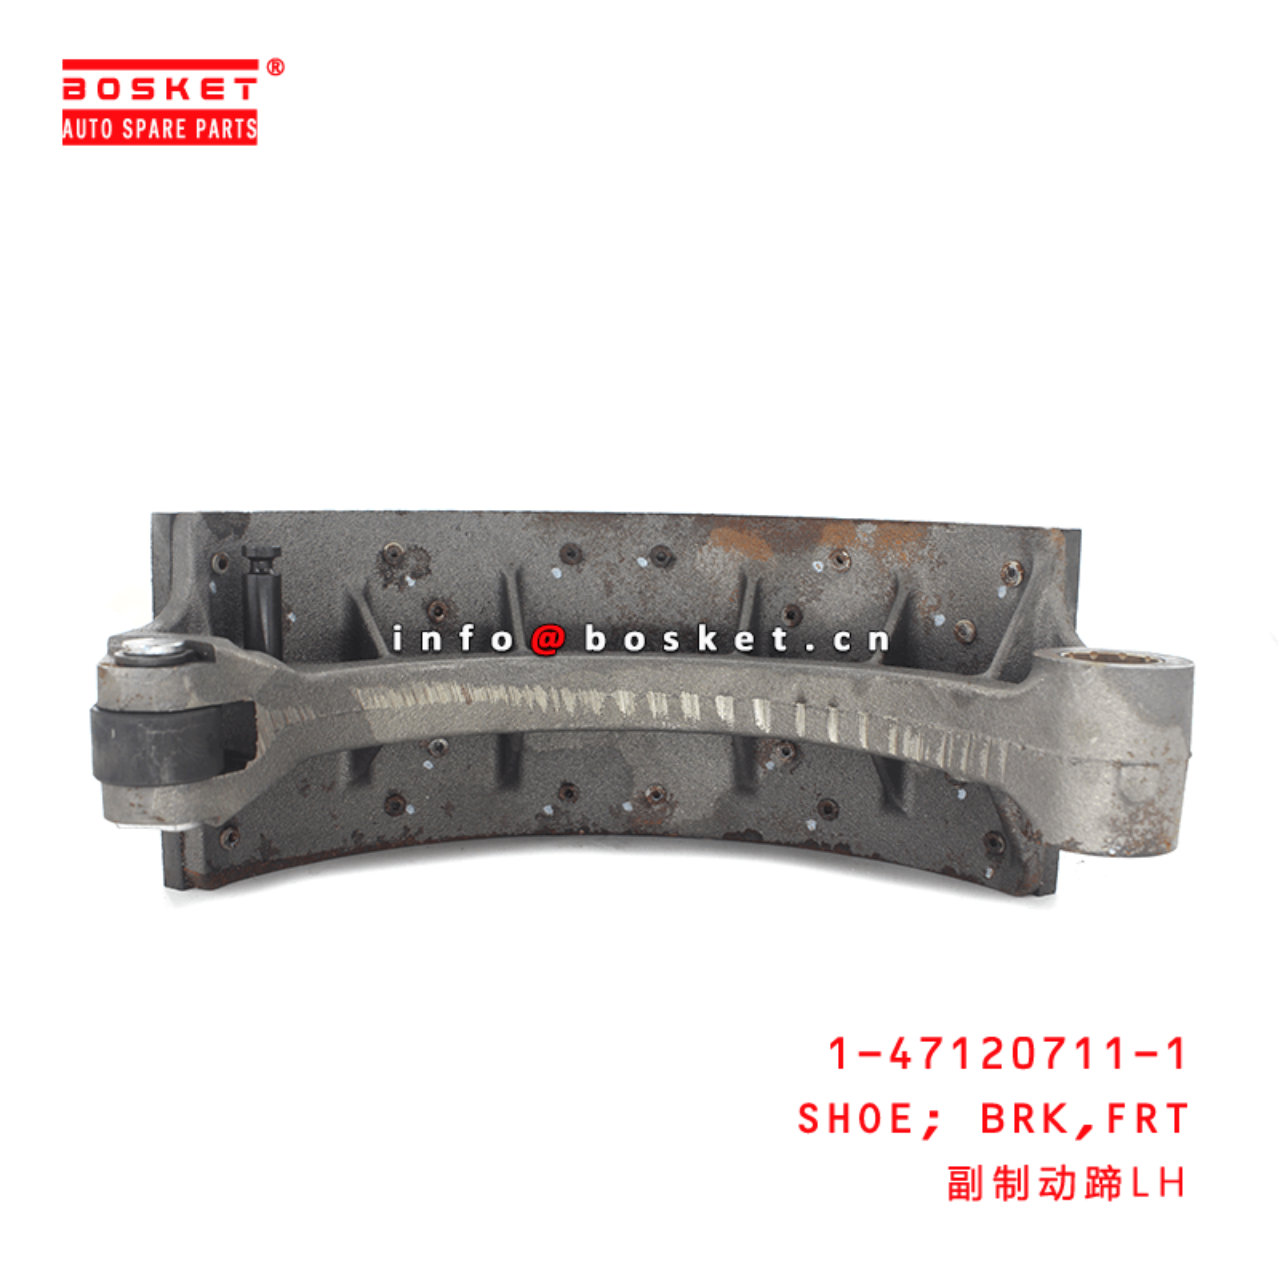 1-47120711-1 Front Brake Shoe 1471207111 Suitable for ISUZU FTR